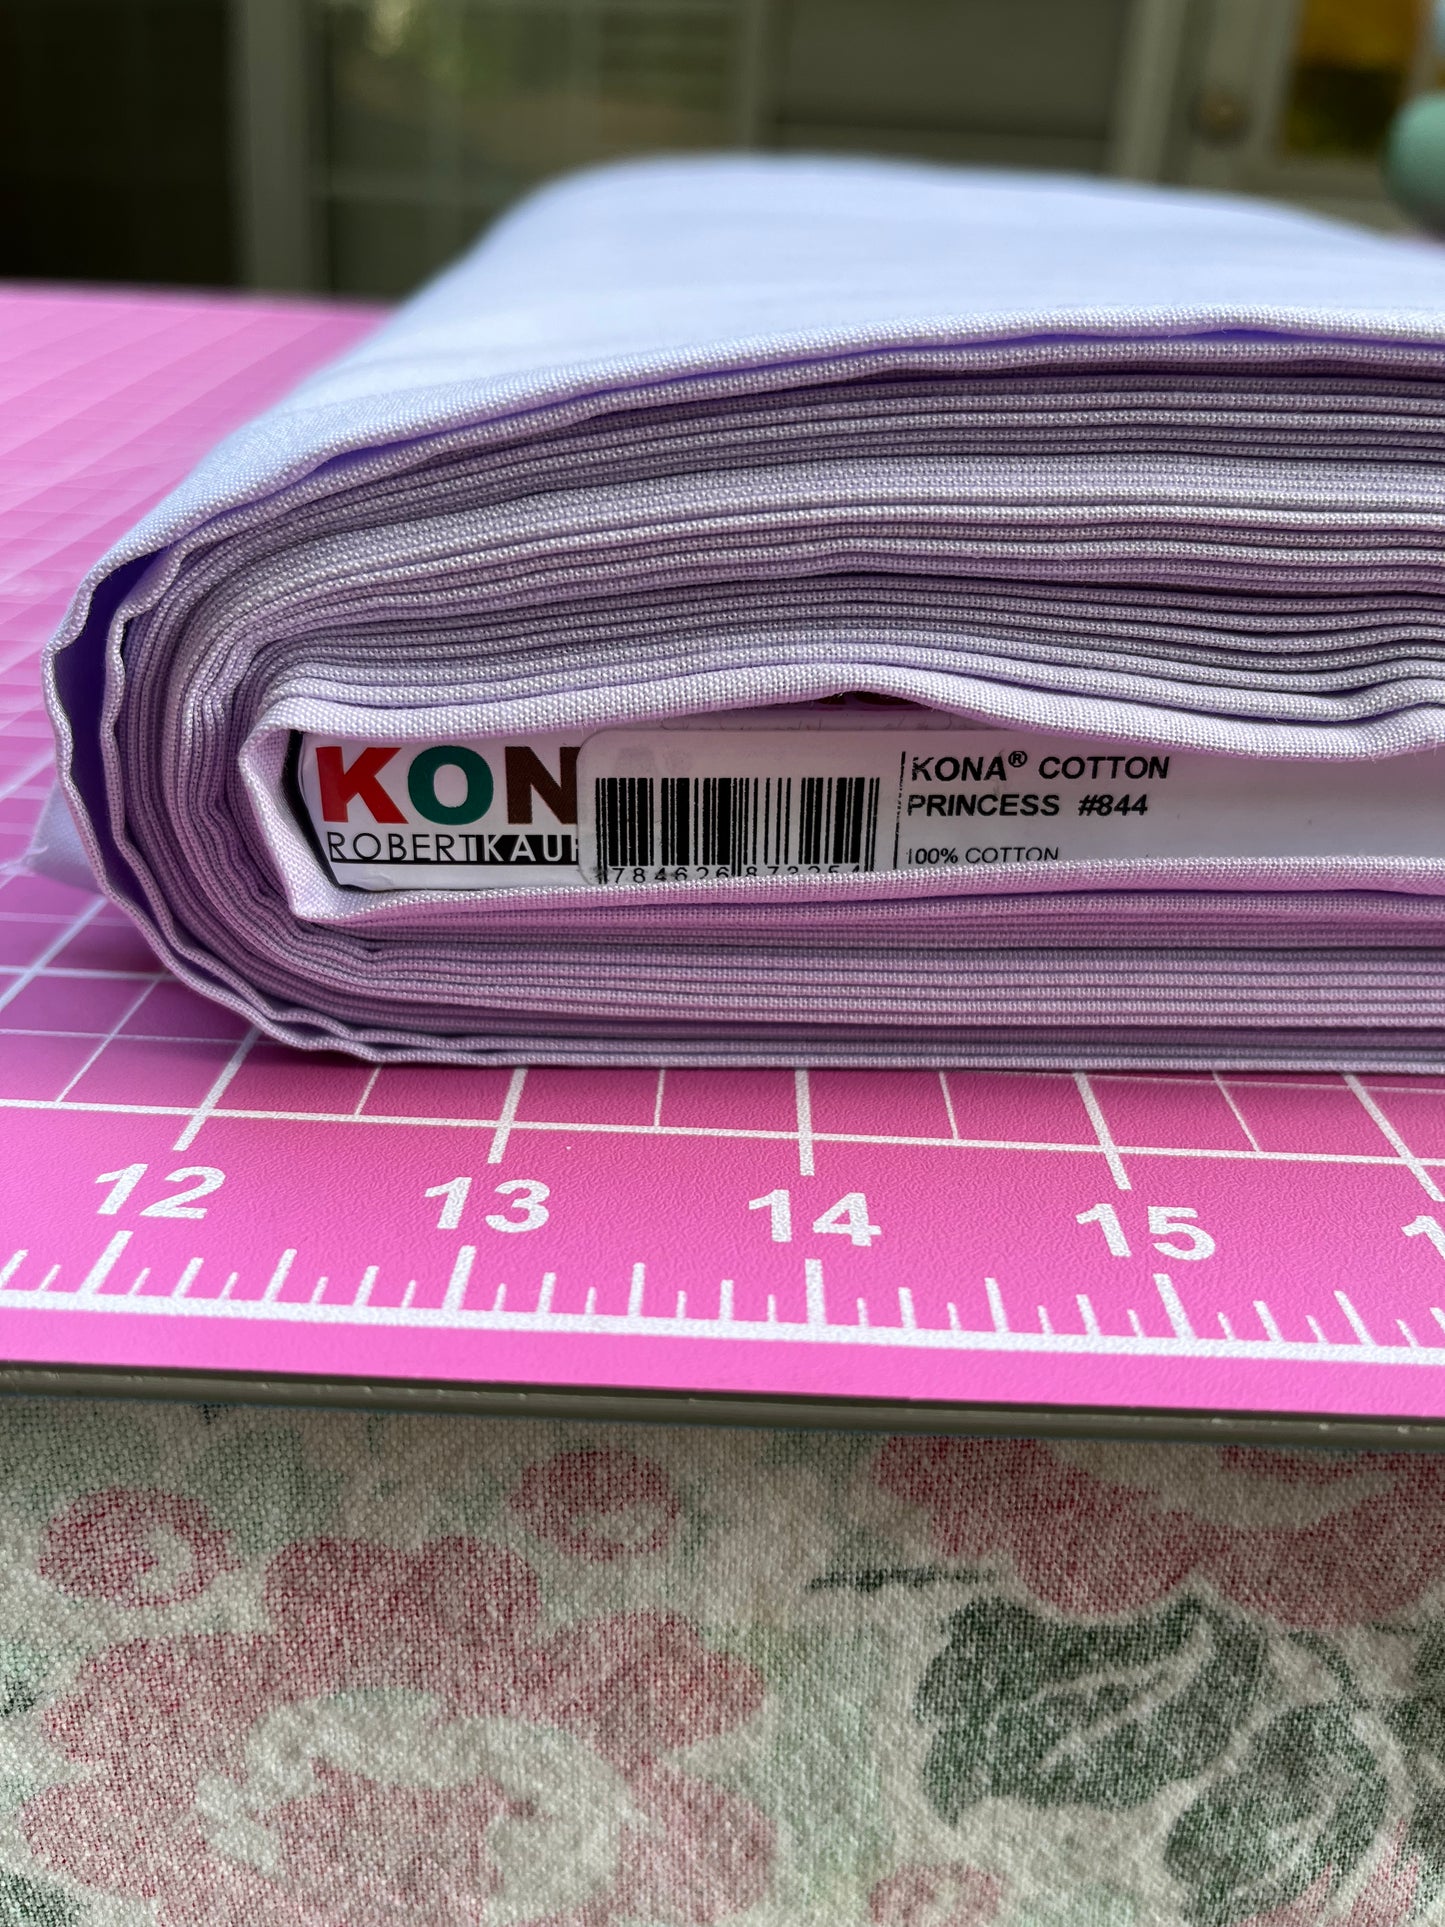 Kona Cotton Princess #844 Embroidery Fabric by the Yard • Cut-to-Order - Kona Cotton Fabric, 100% cotton